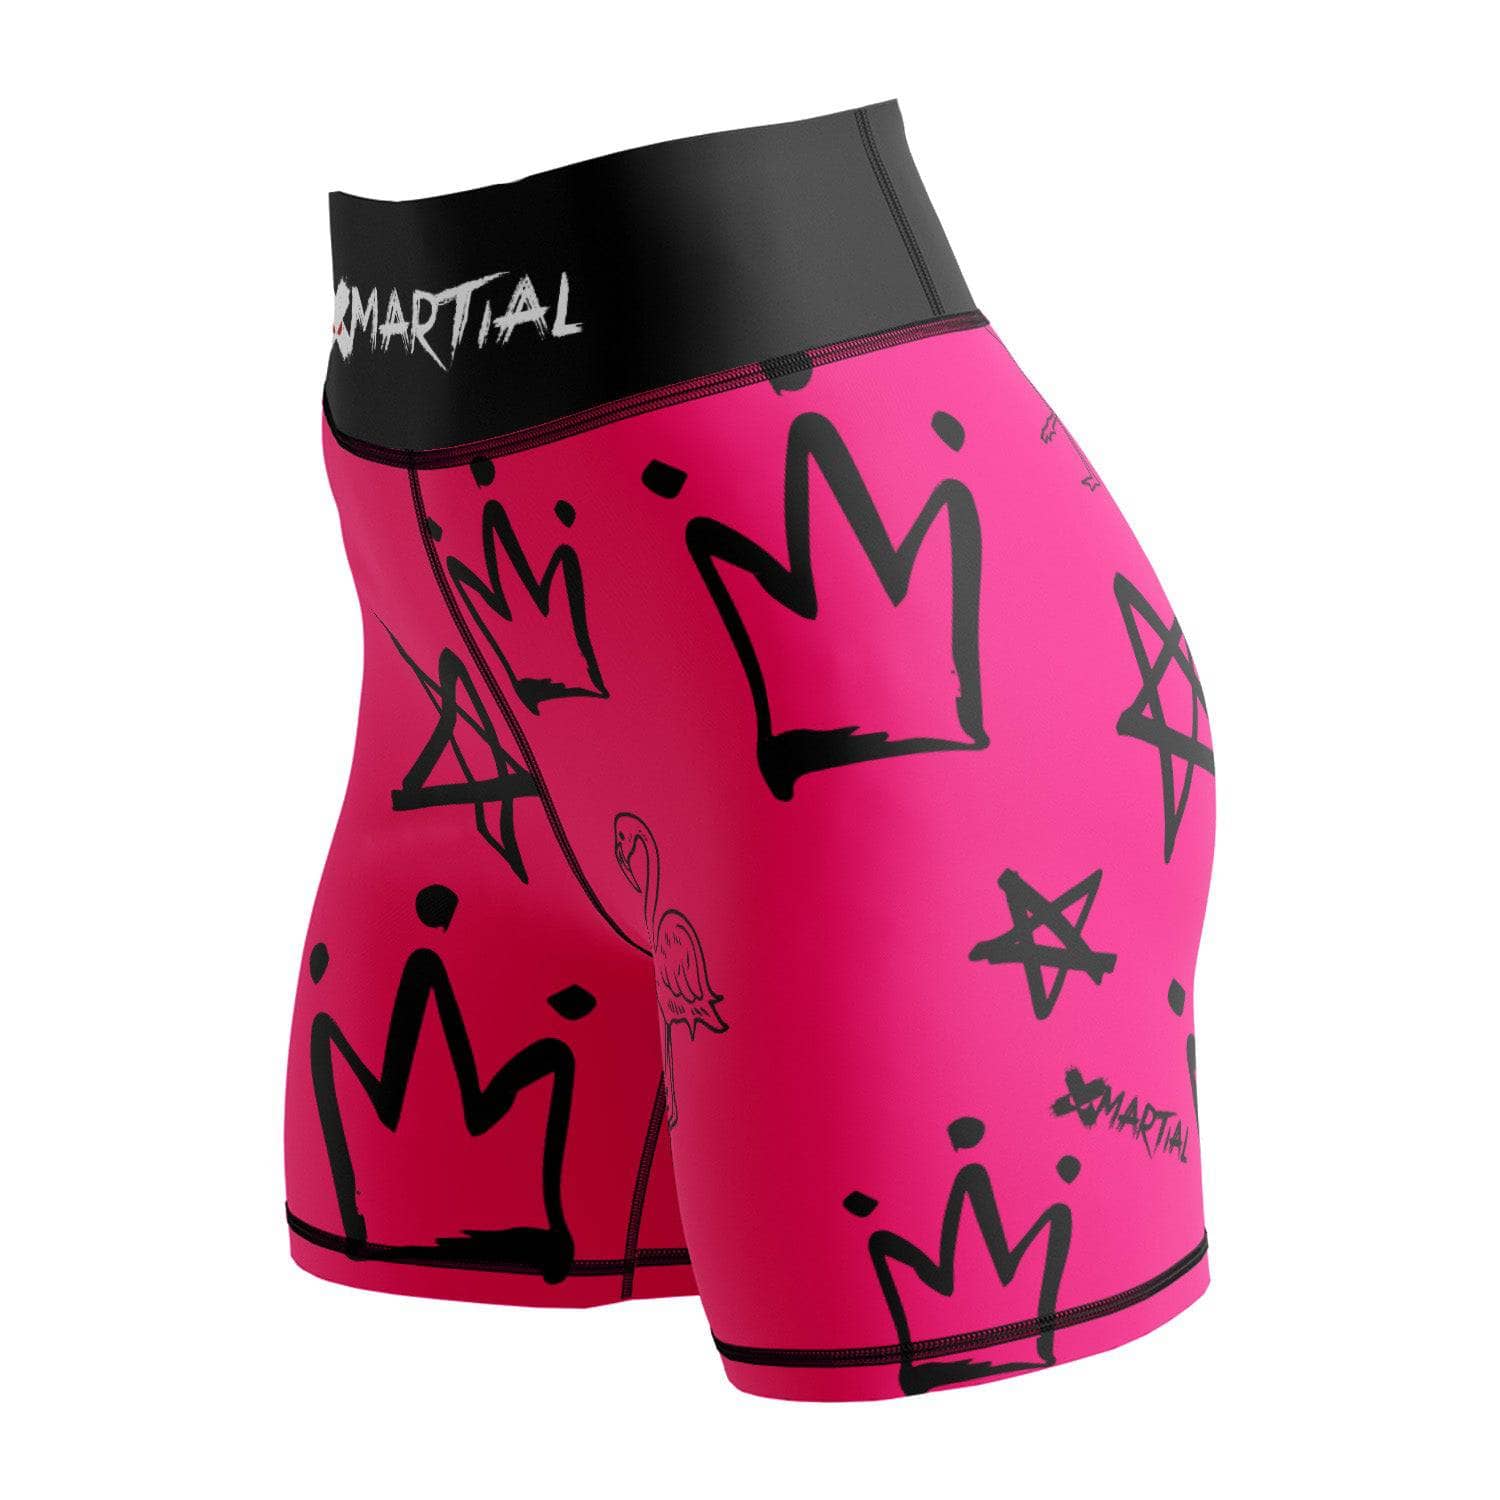 Flamazing Women's BJJ/MMA Compression Shorts XMARTIAL